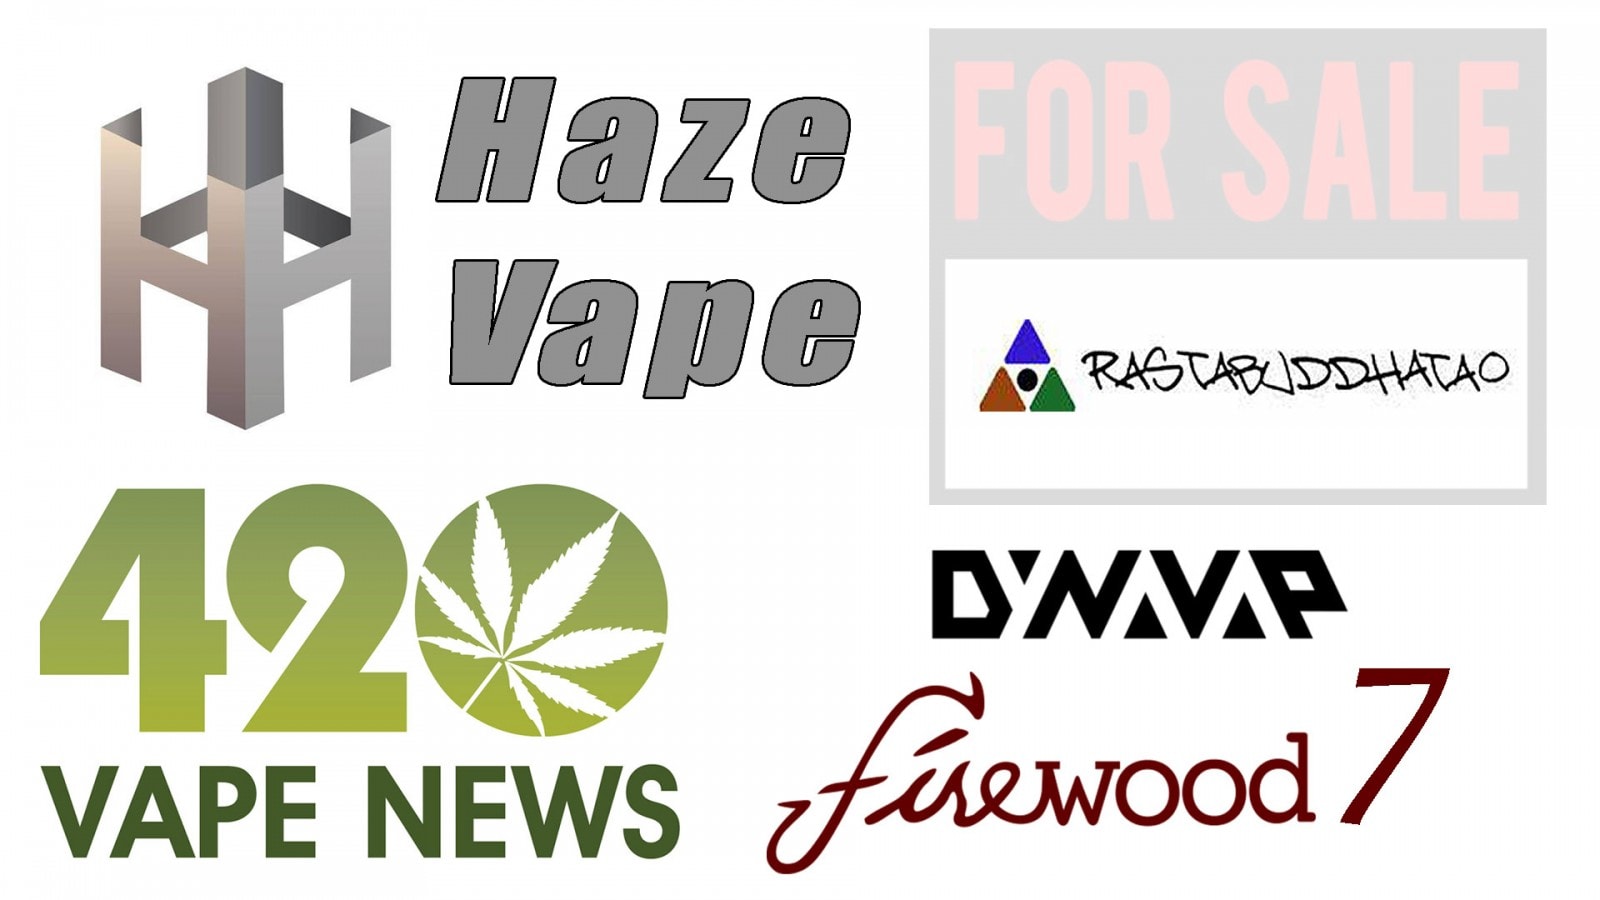 Haze Vaporizers IS BACK, RBT is For Sale, New Dynavap Stuff – Vape News 8/14/2020